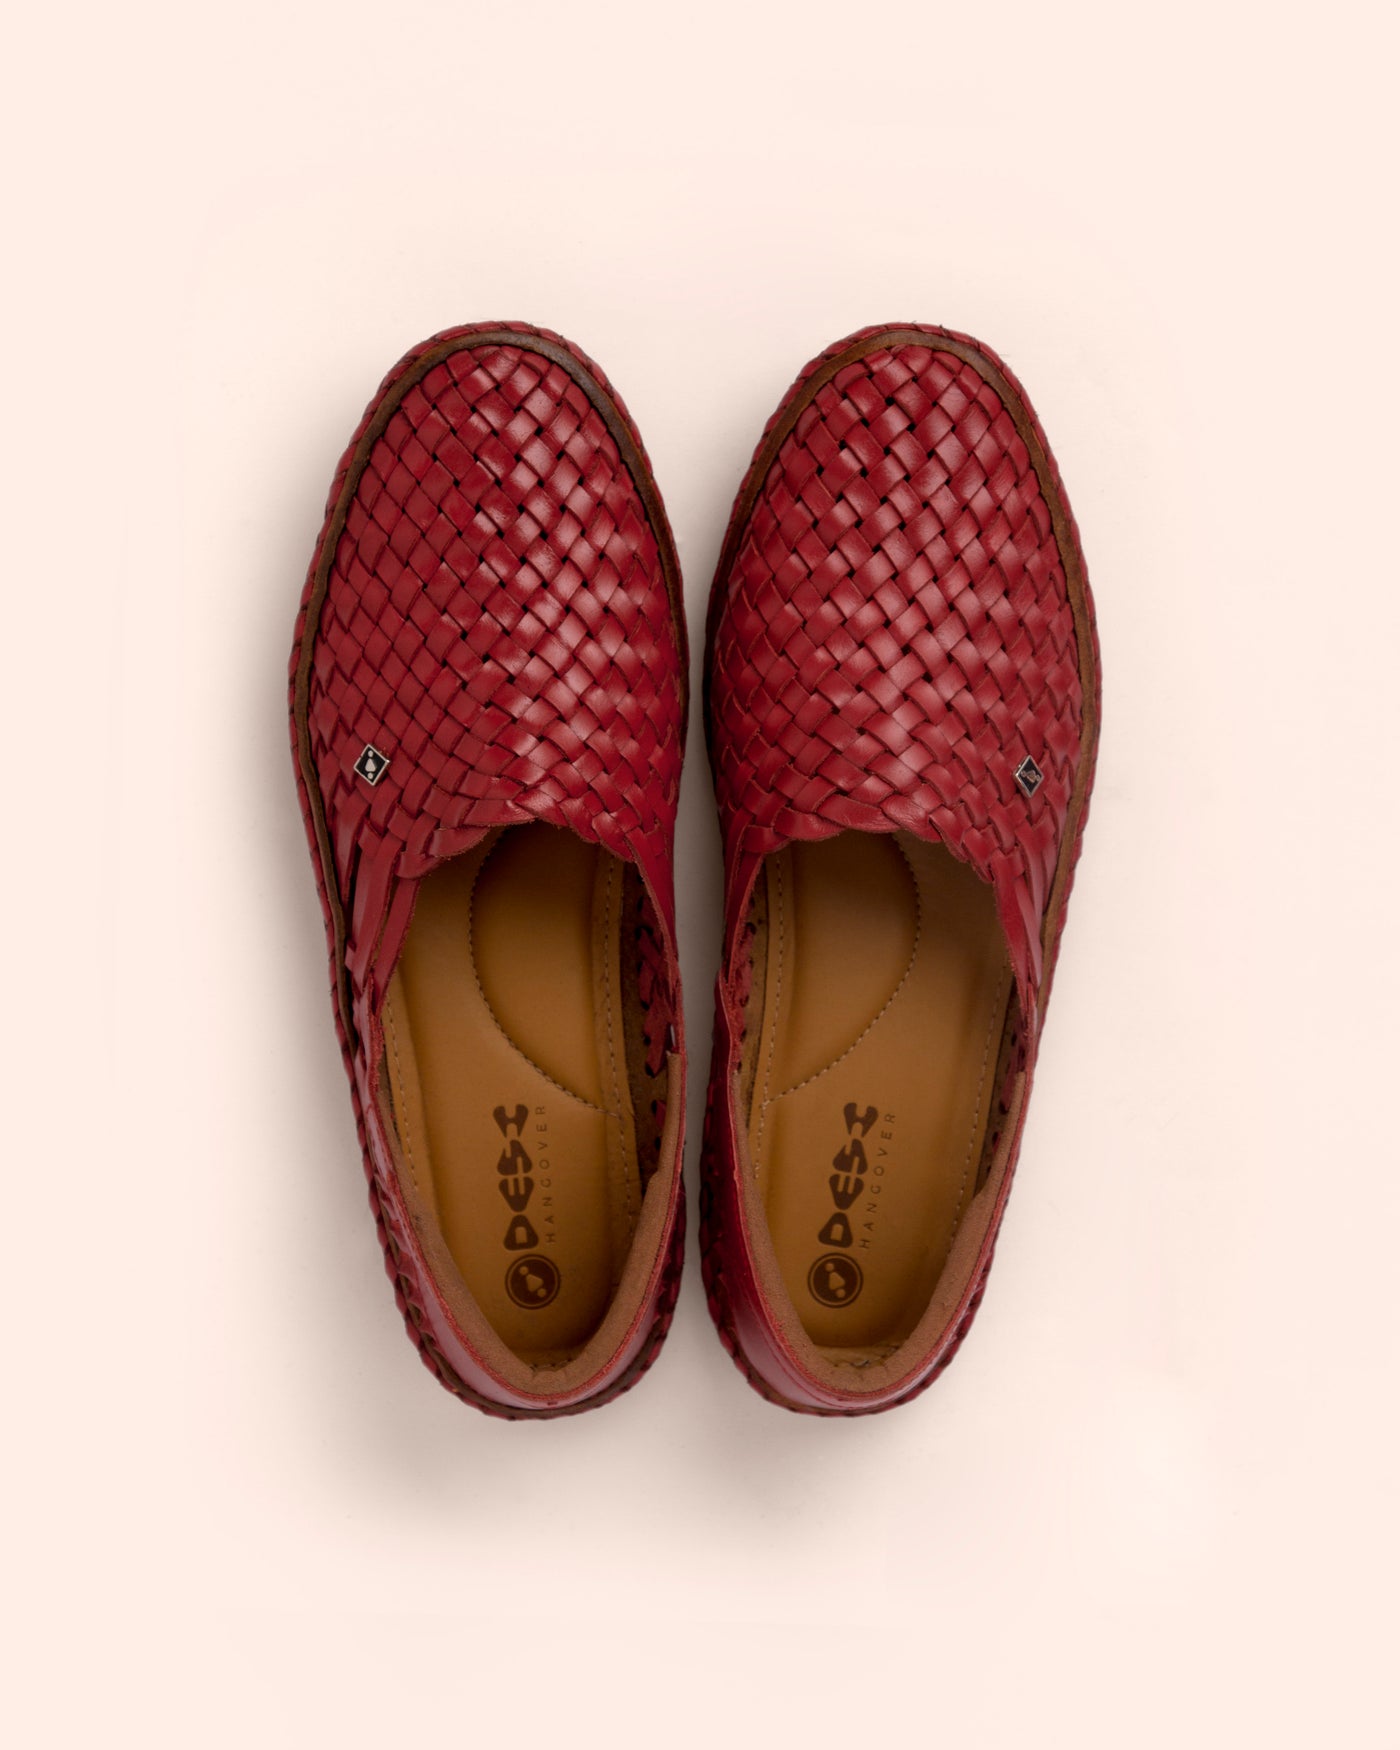 Fireworkshouse-handmade-leather-shoes-HOLA RED